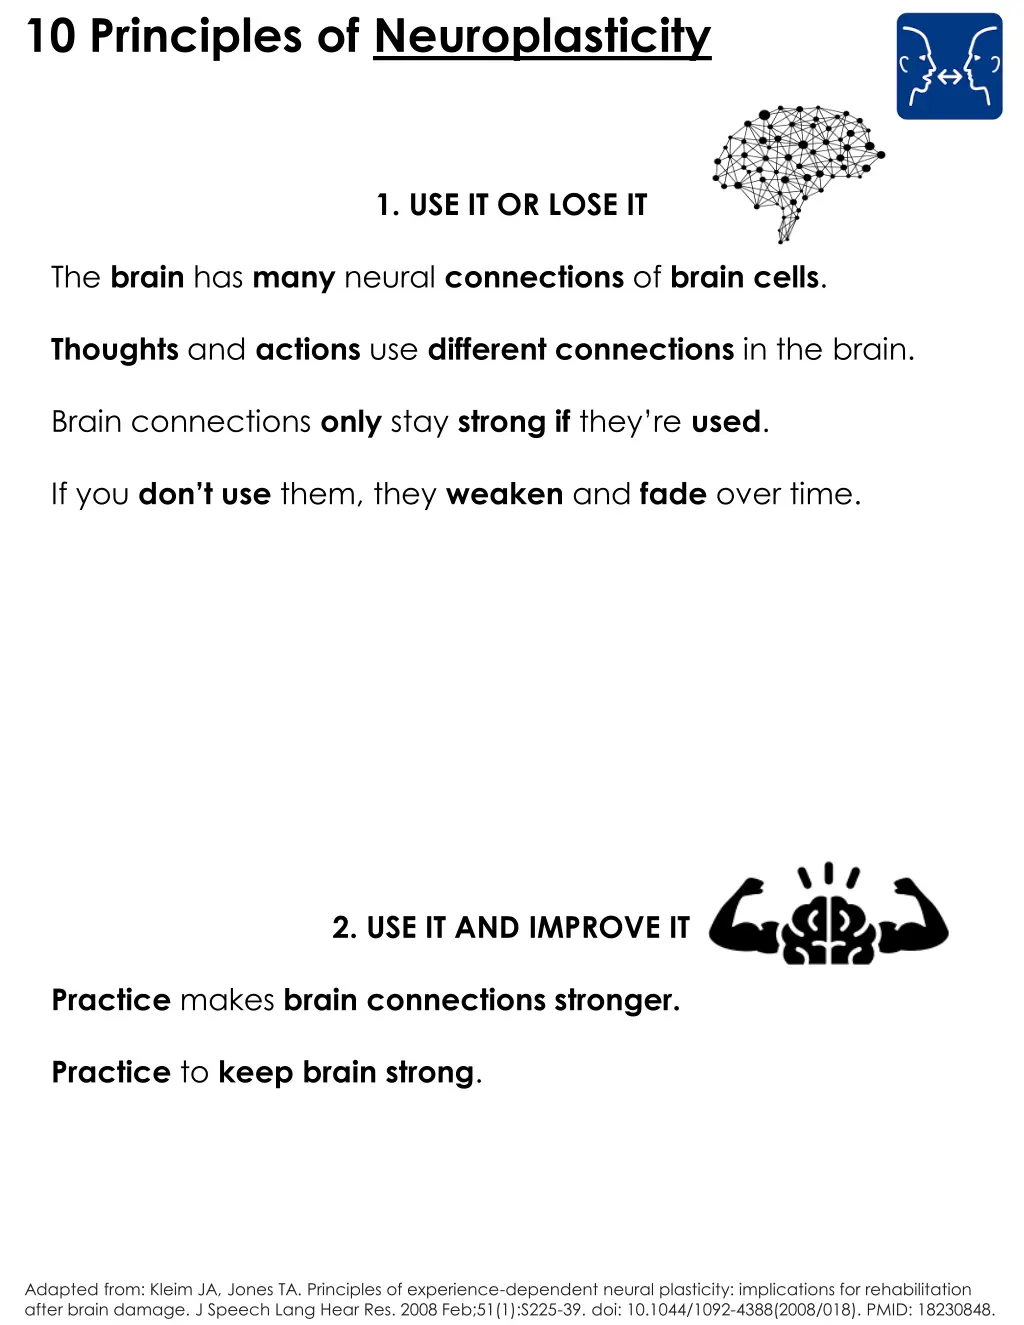 10 principles of neuroplasticity 2